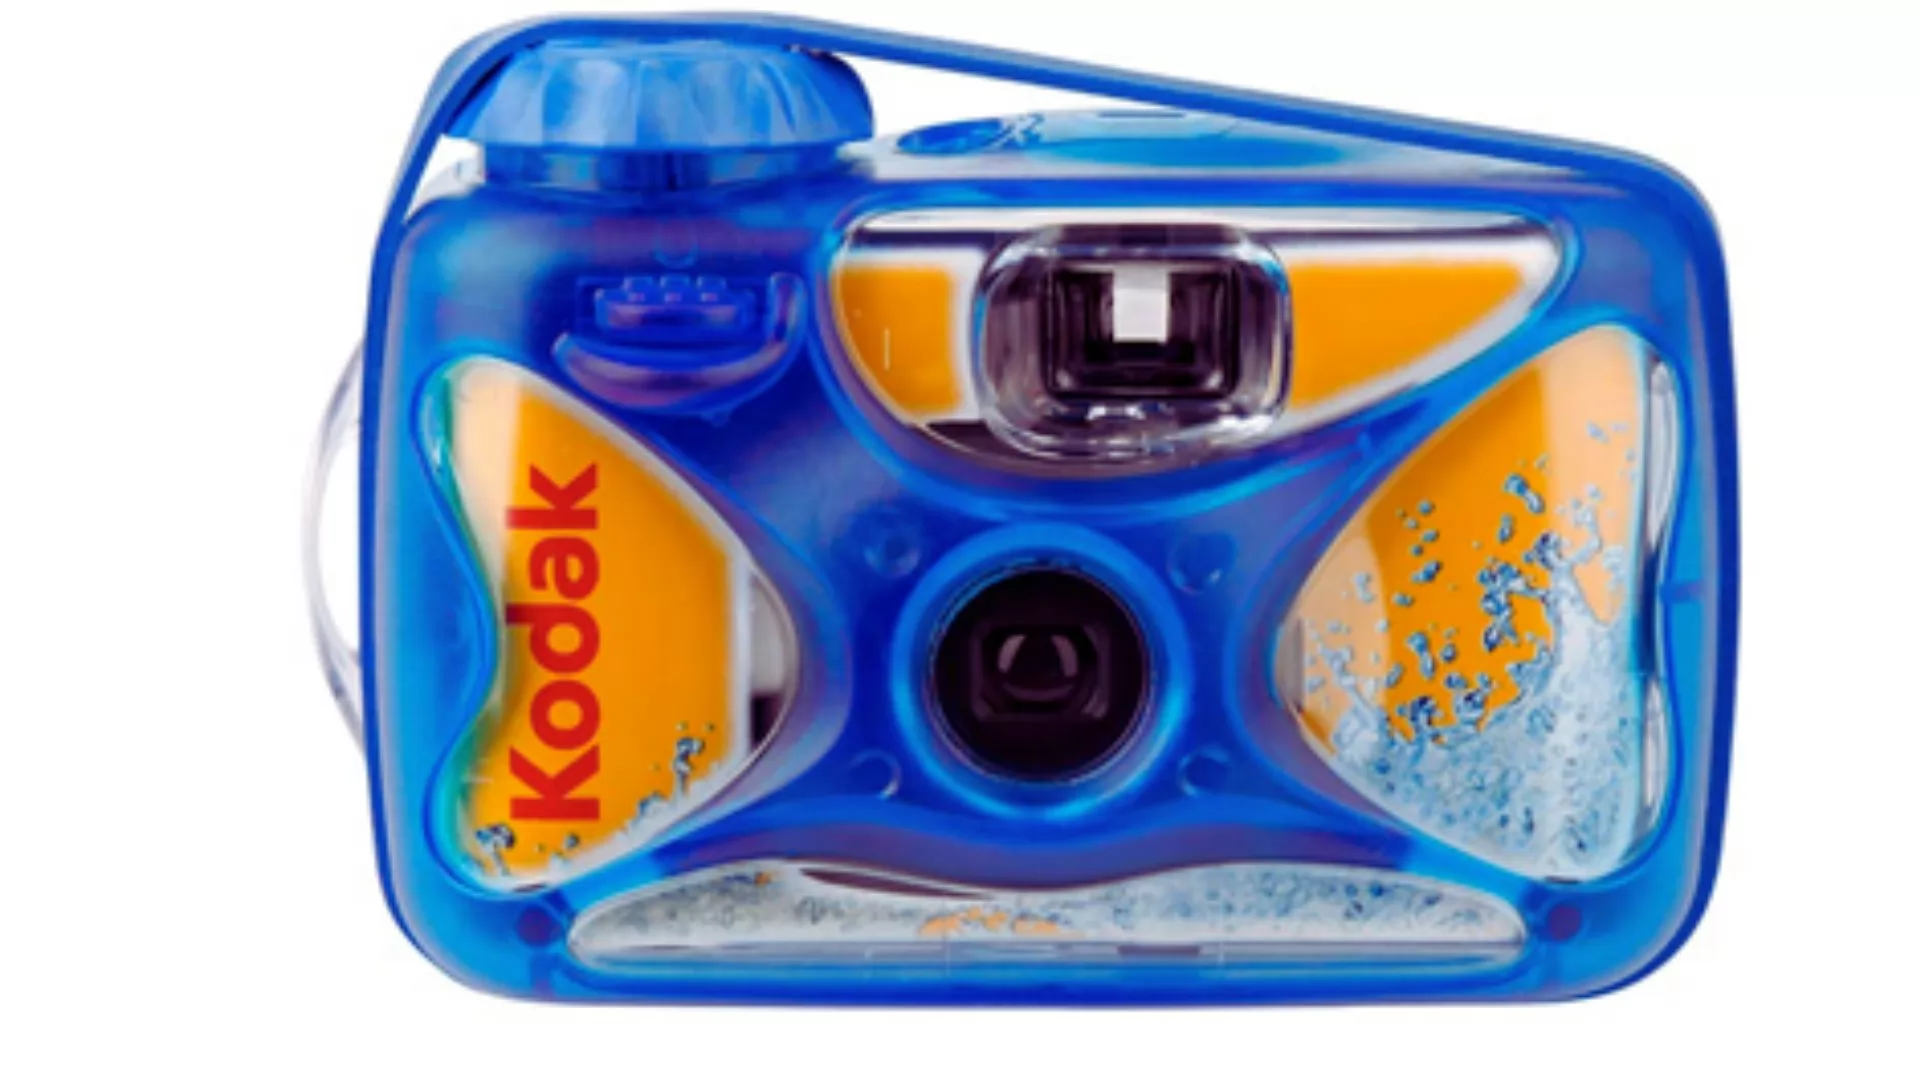 Kodak Sport Underwater Camera